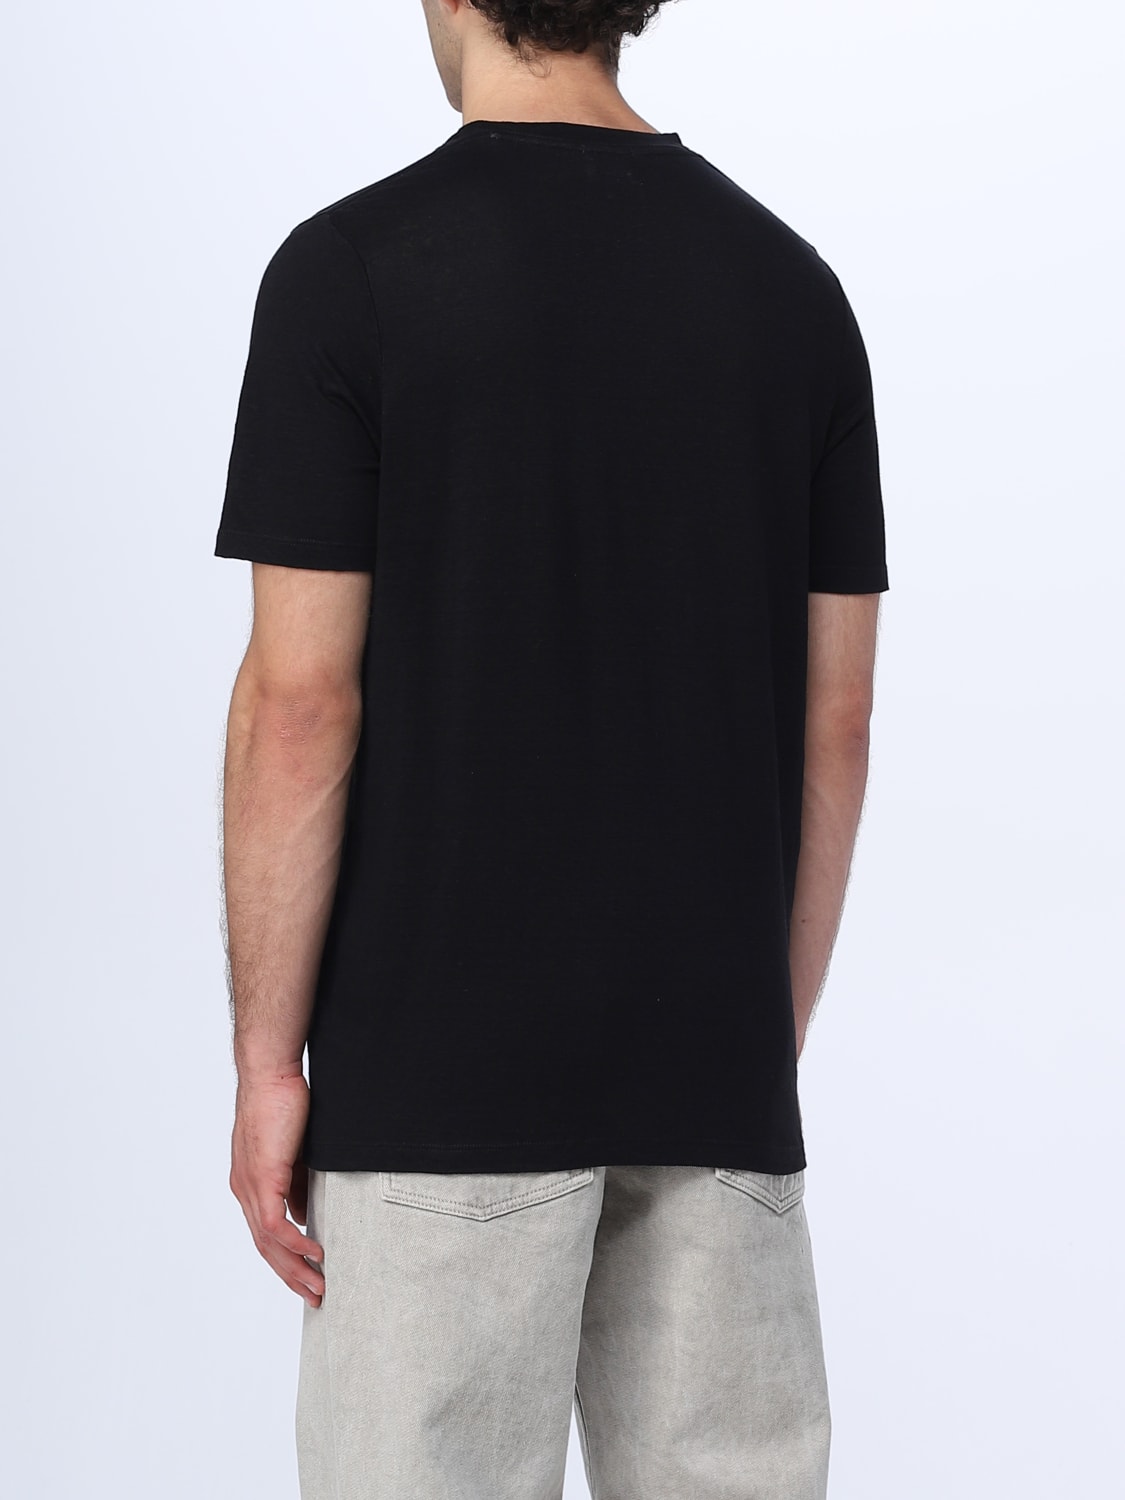 ISABEL MARANT: t-shirt for men - Black | Isabel Marant t-shirt ...